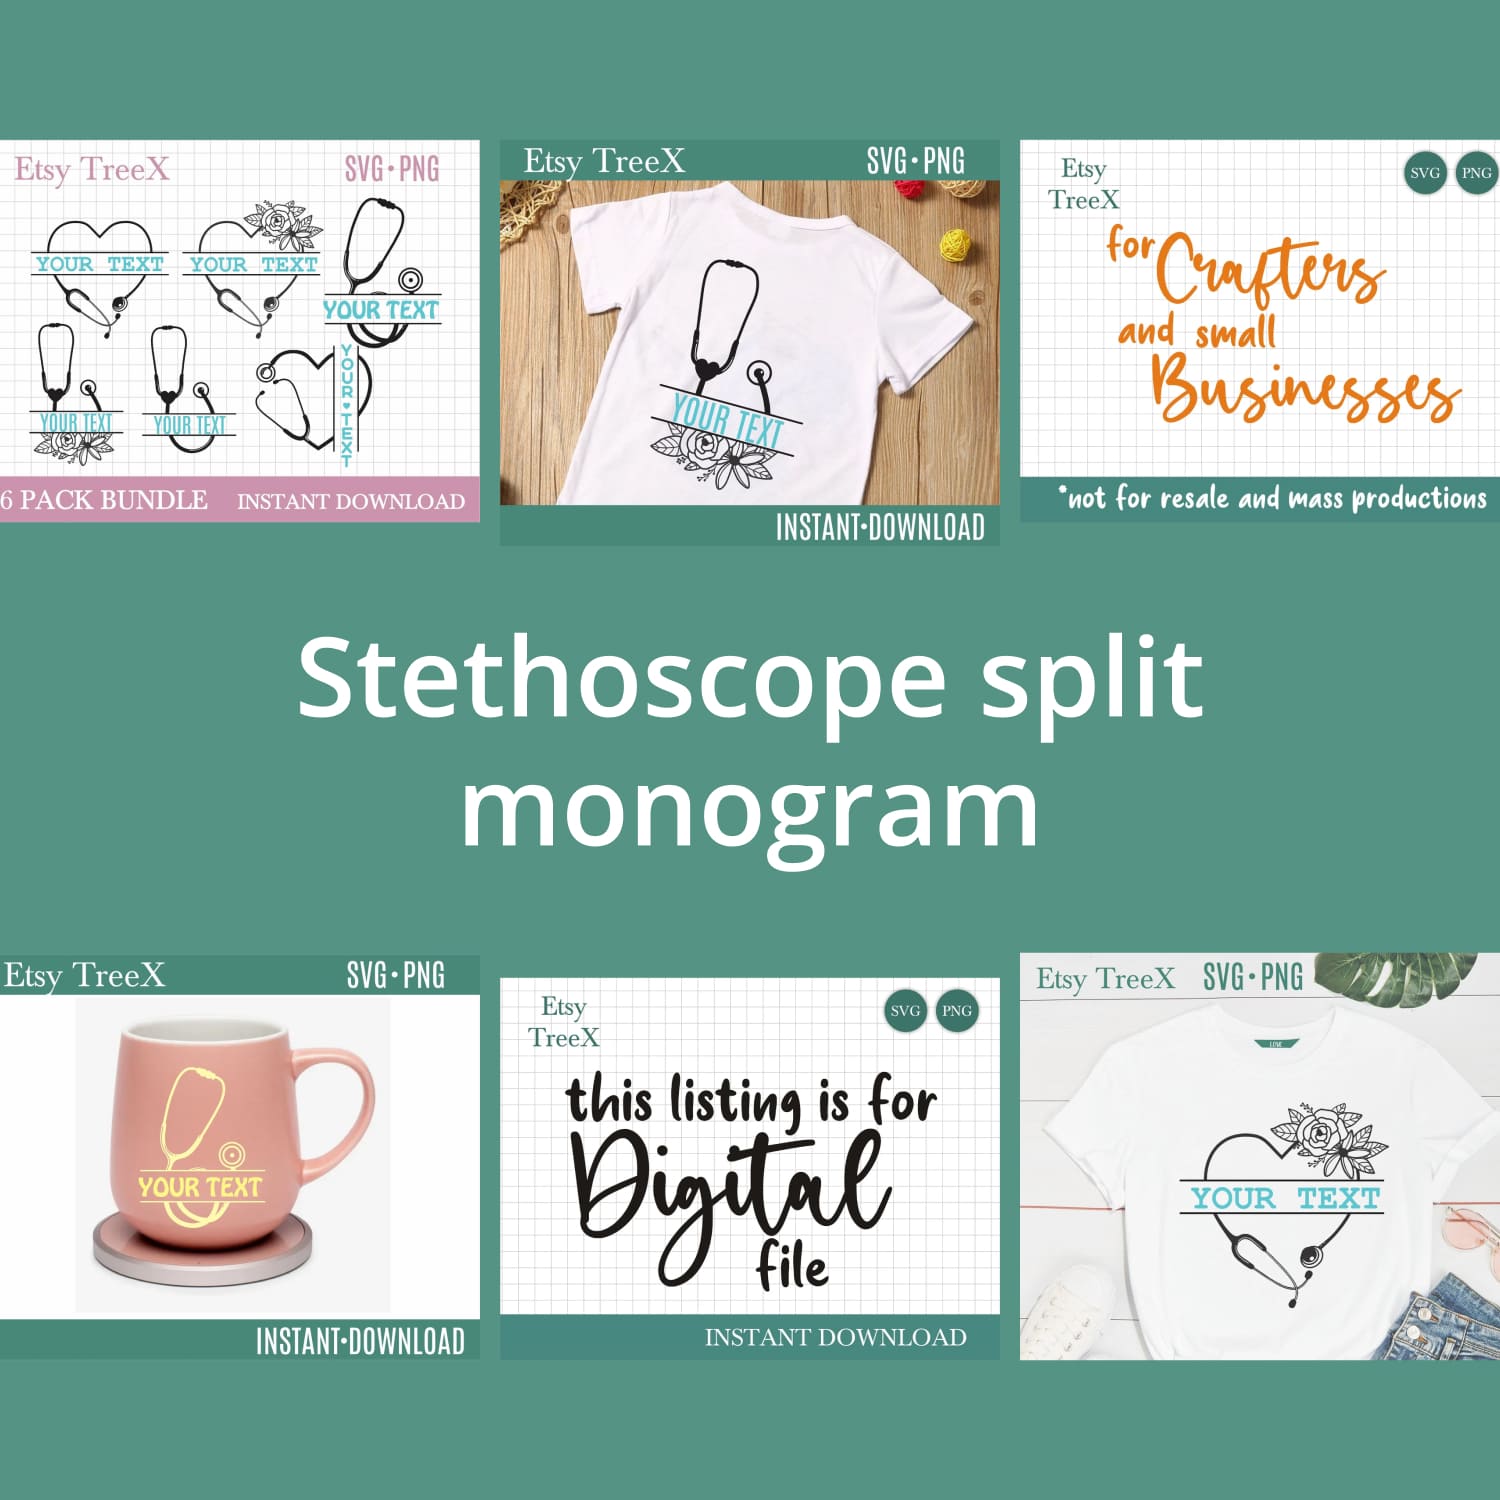 Stethoscope split monogram SVG bundle by Oxee.